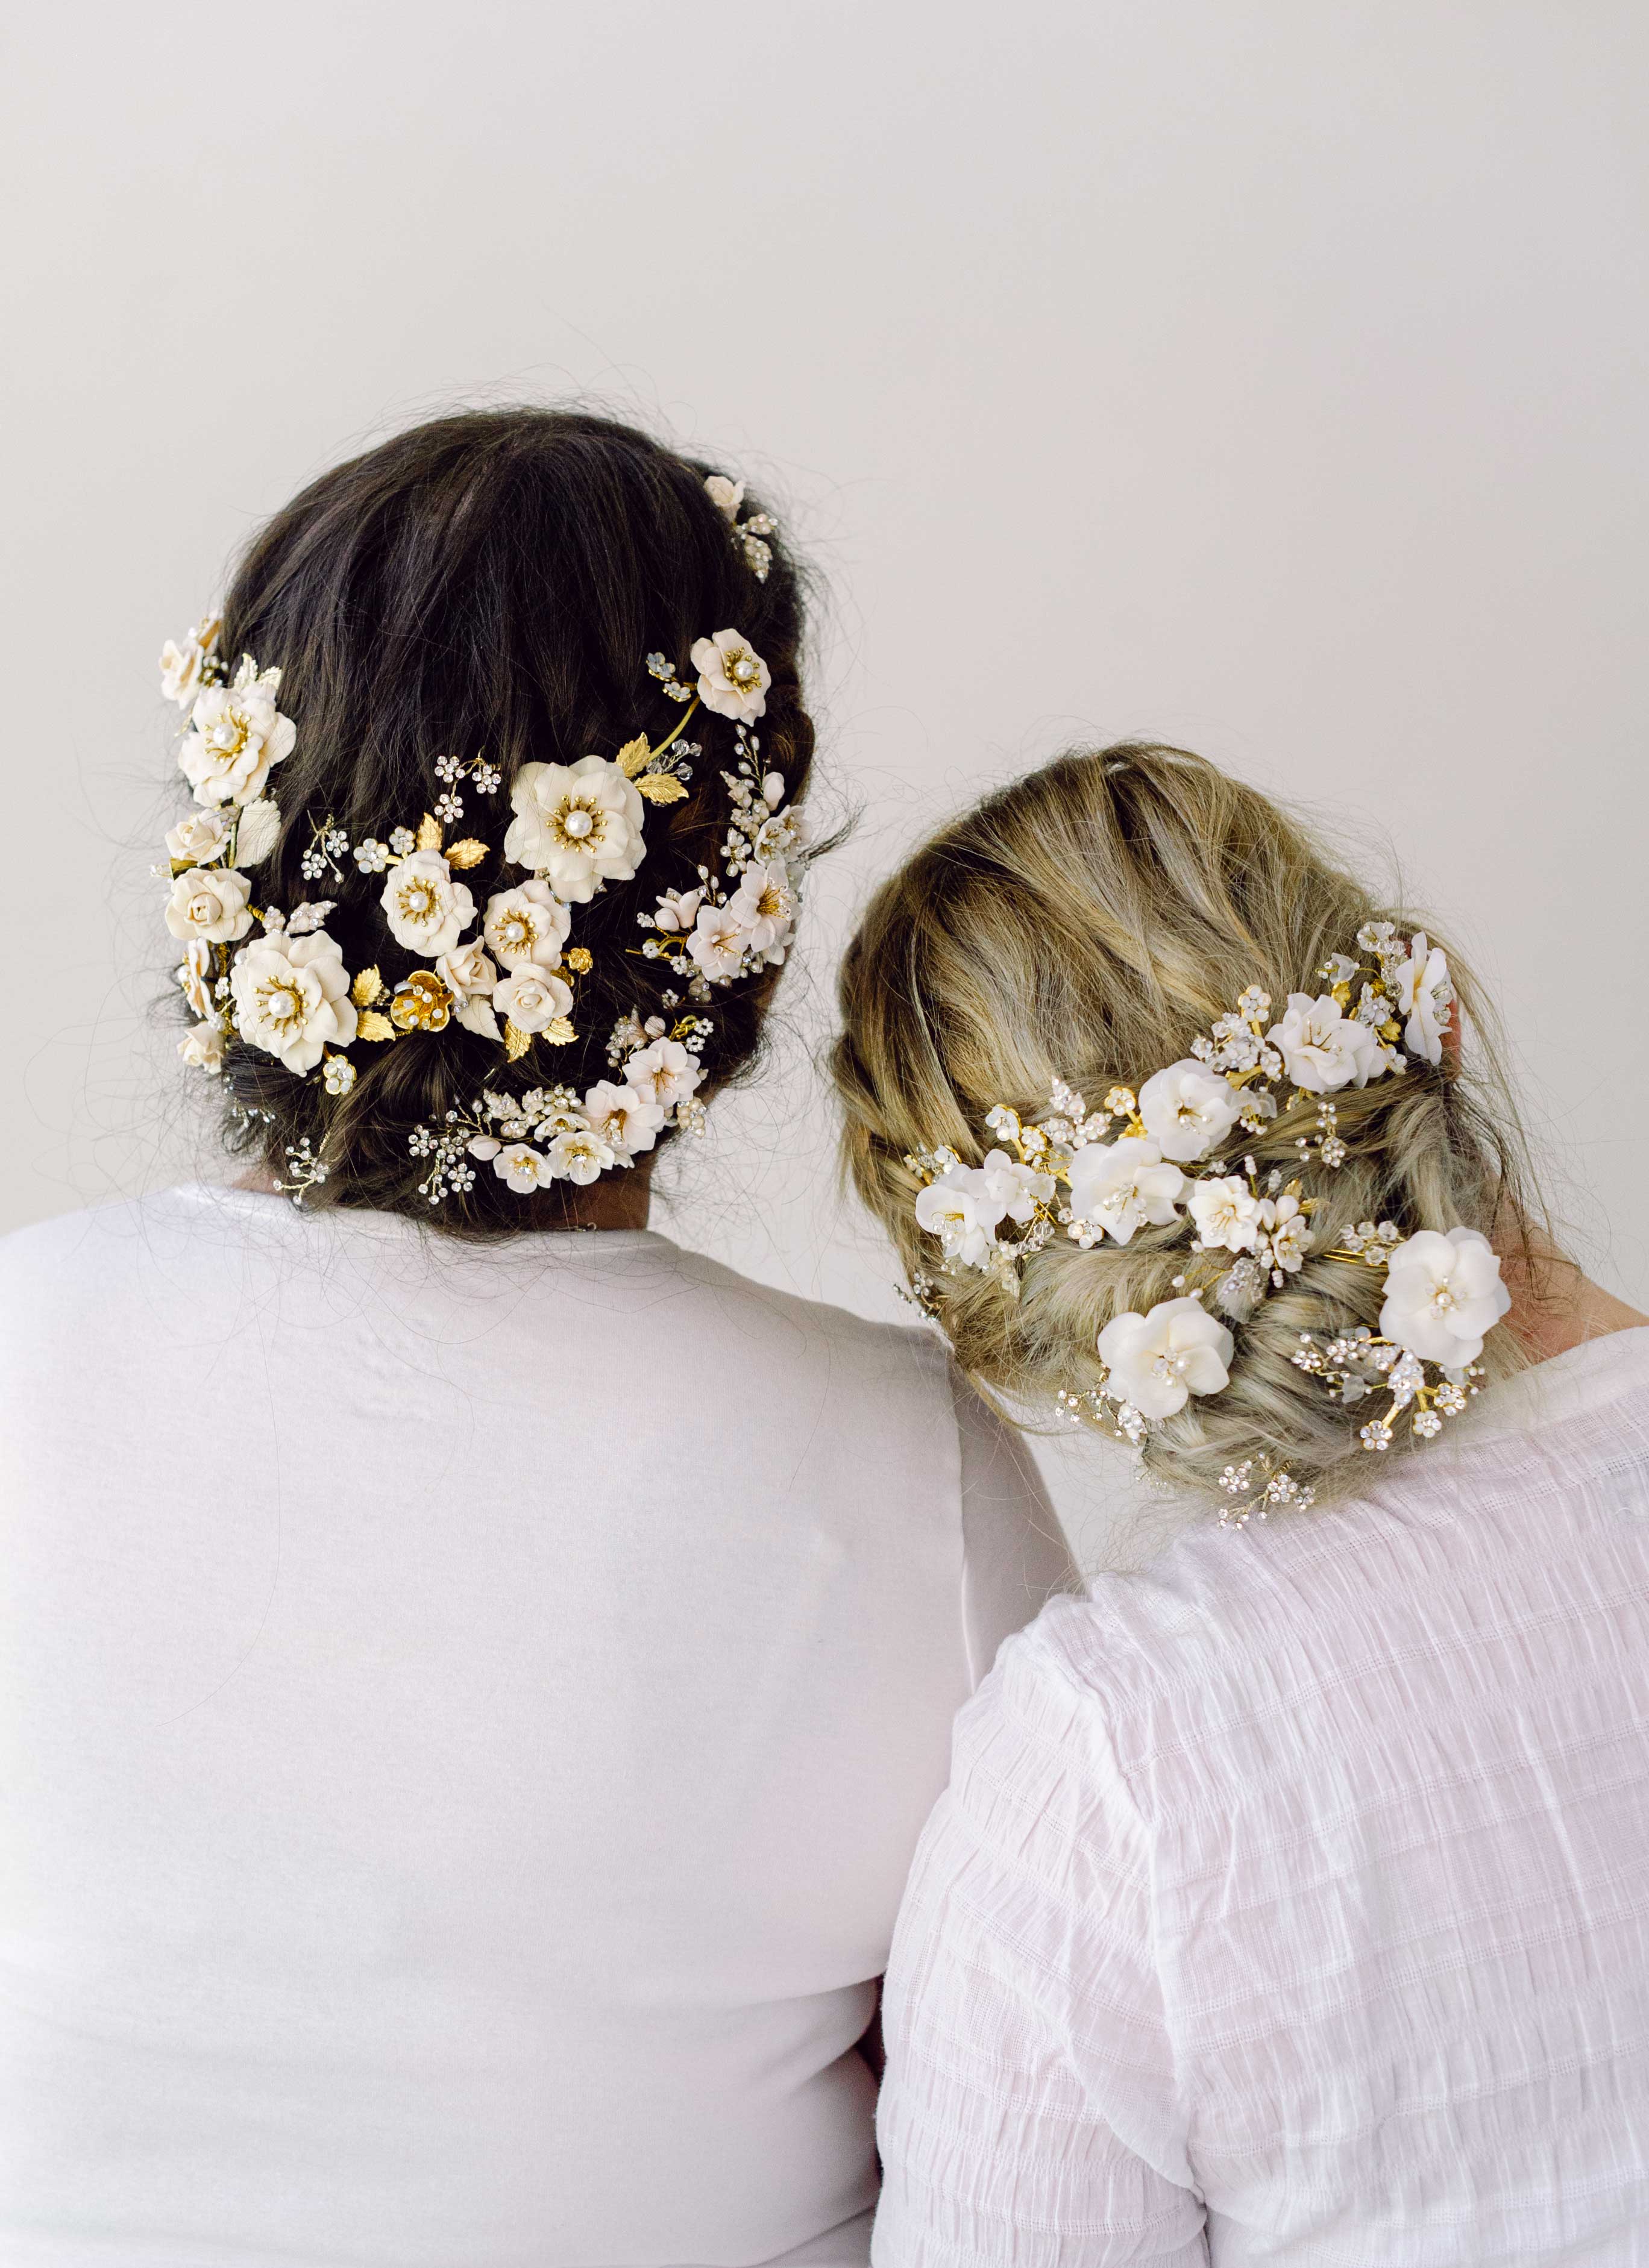 Beautiful handmade hair flowers by Twigs & Honey